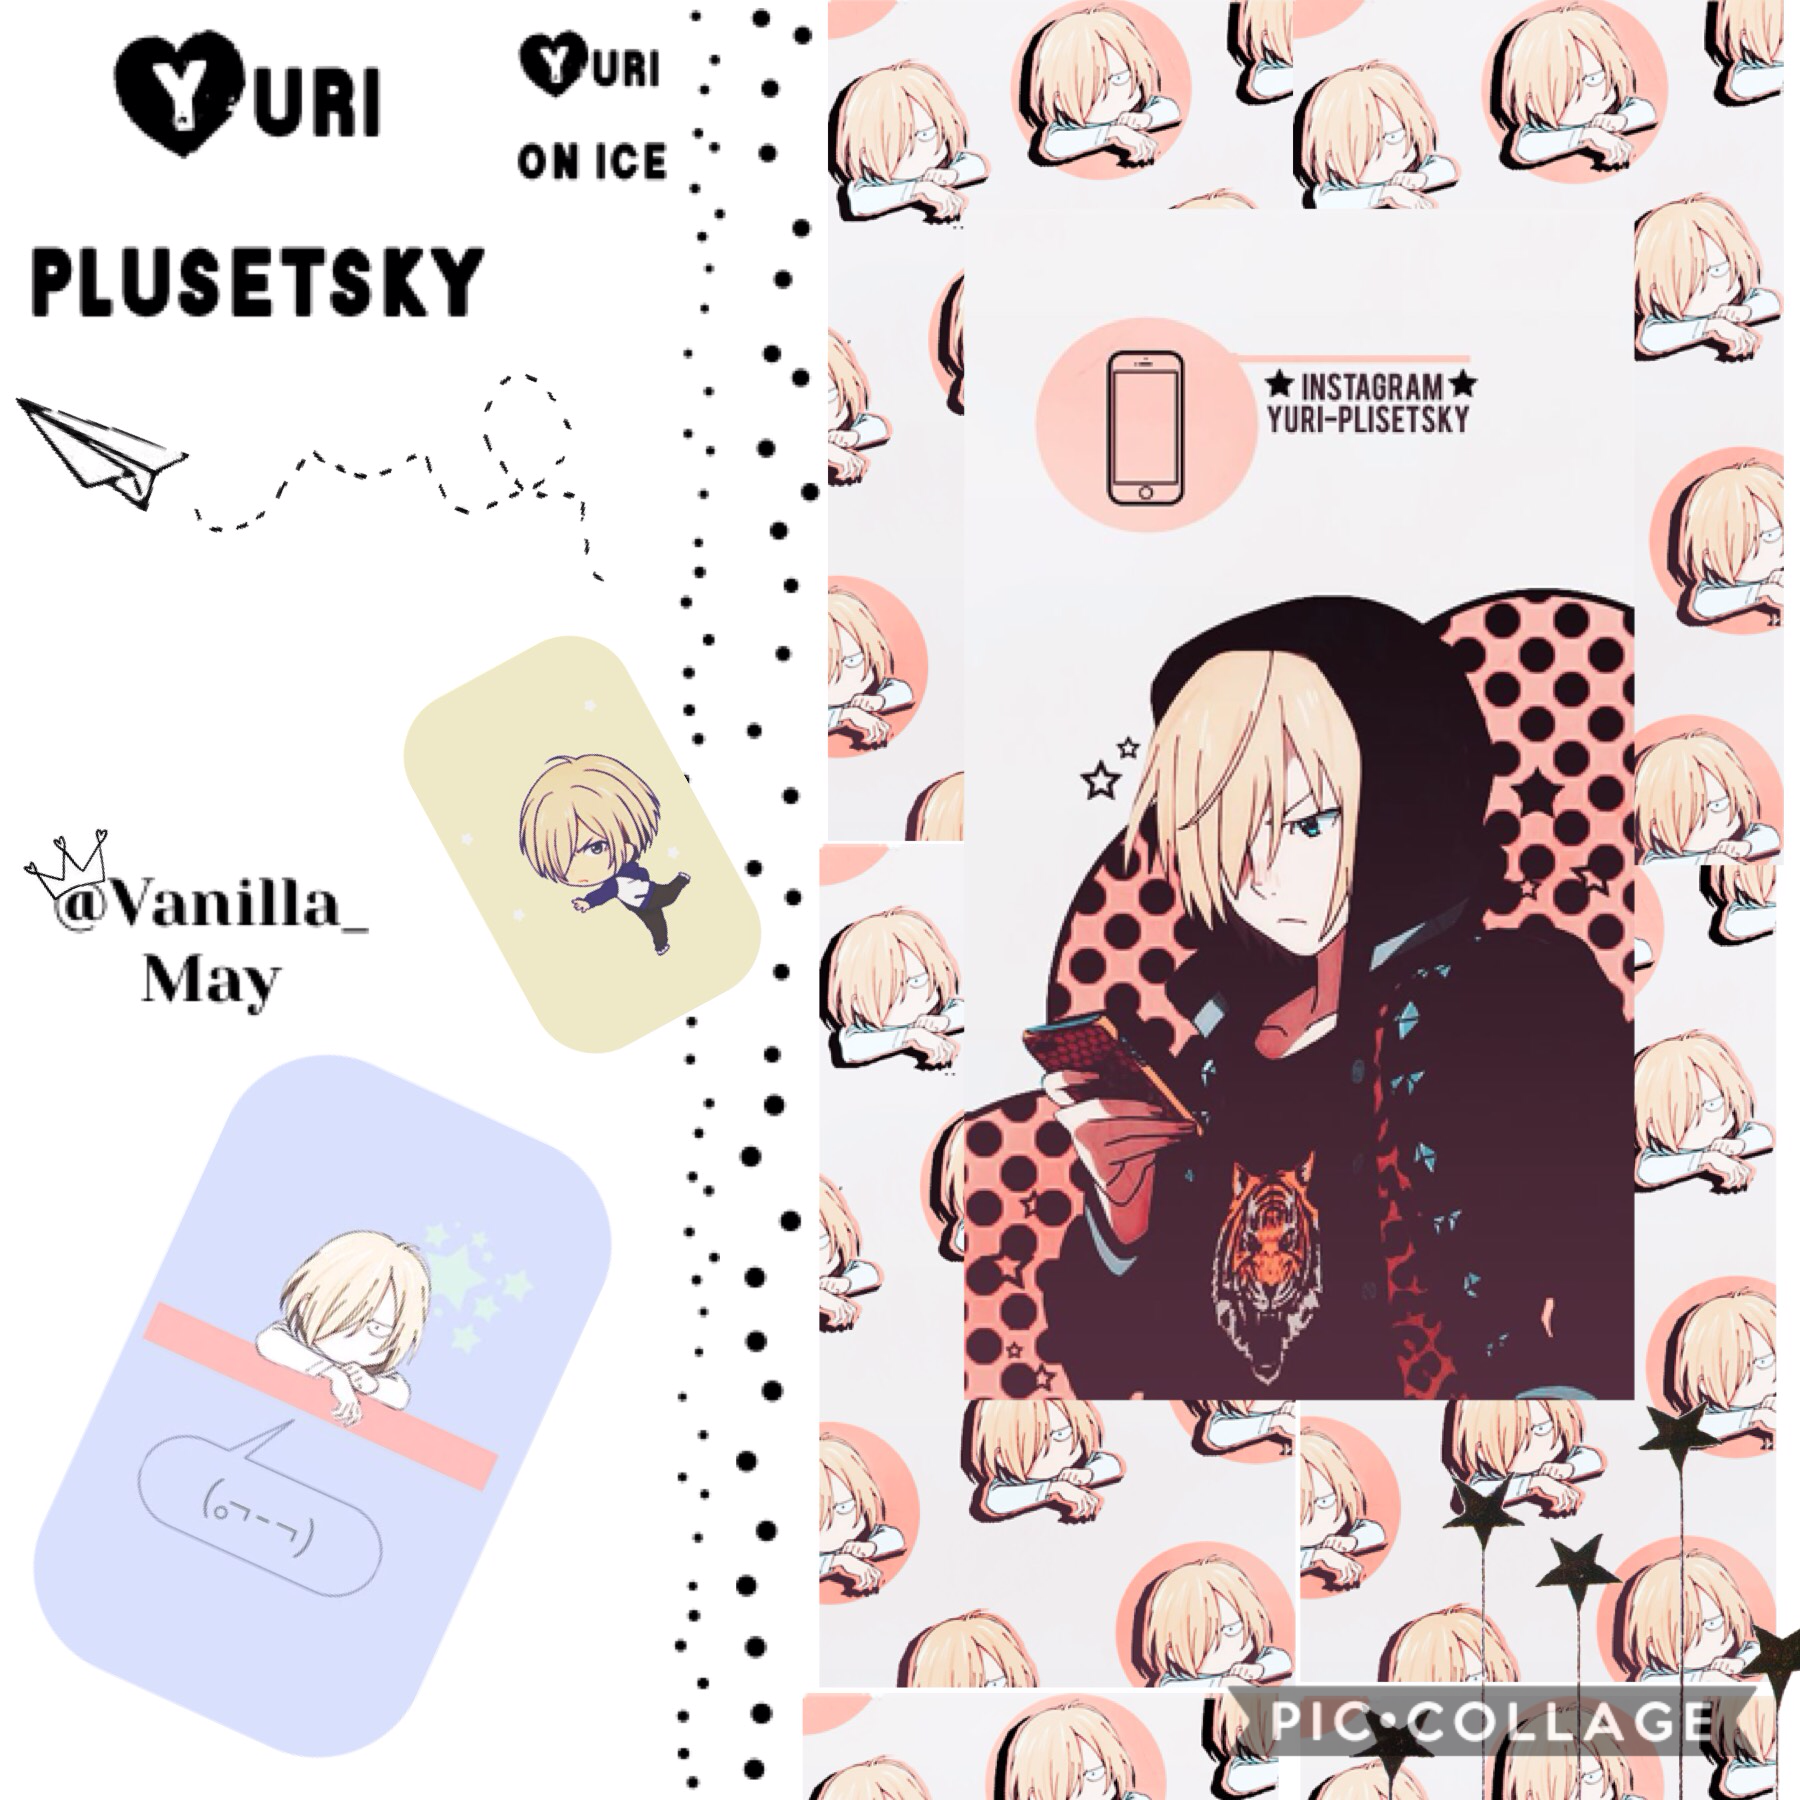 Yuri Plusetsky | Yuri on ICE ~ idk what to write here so ya